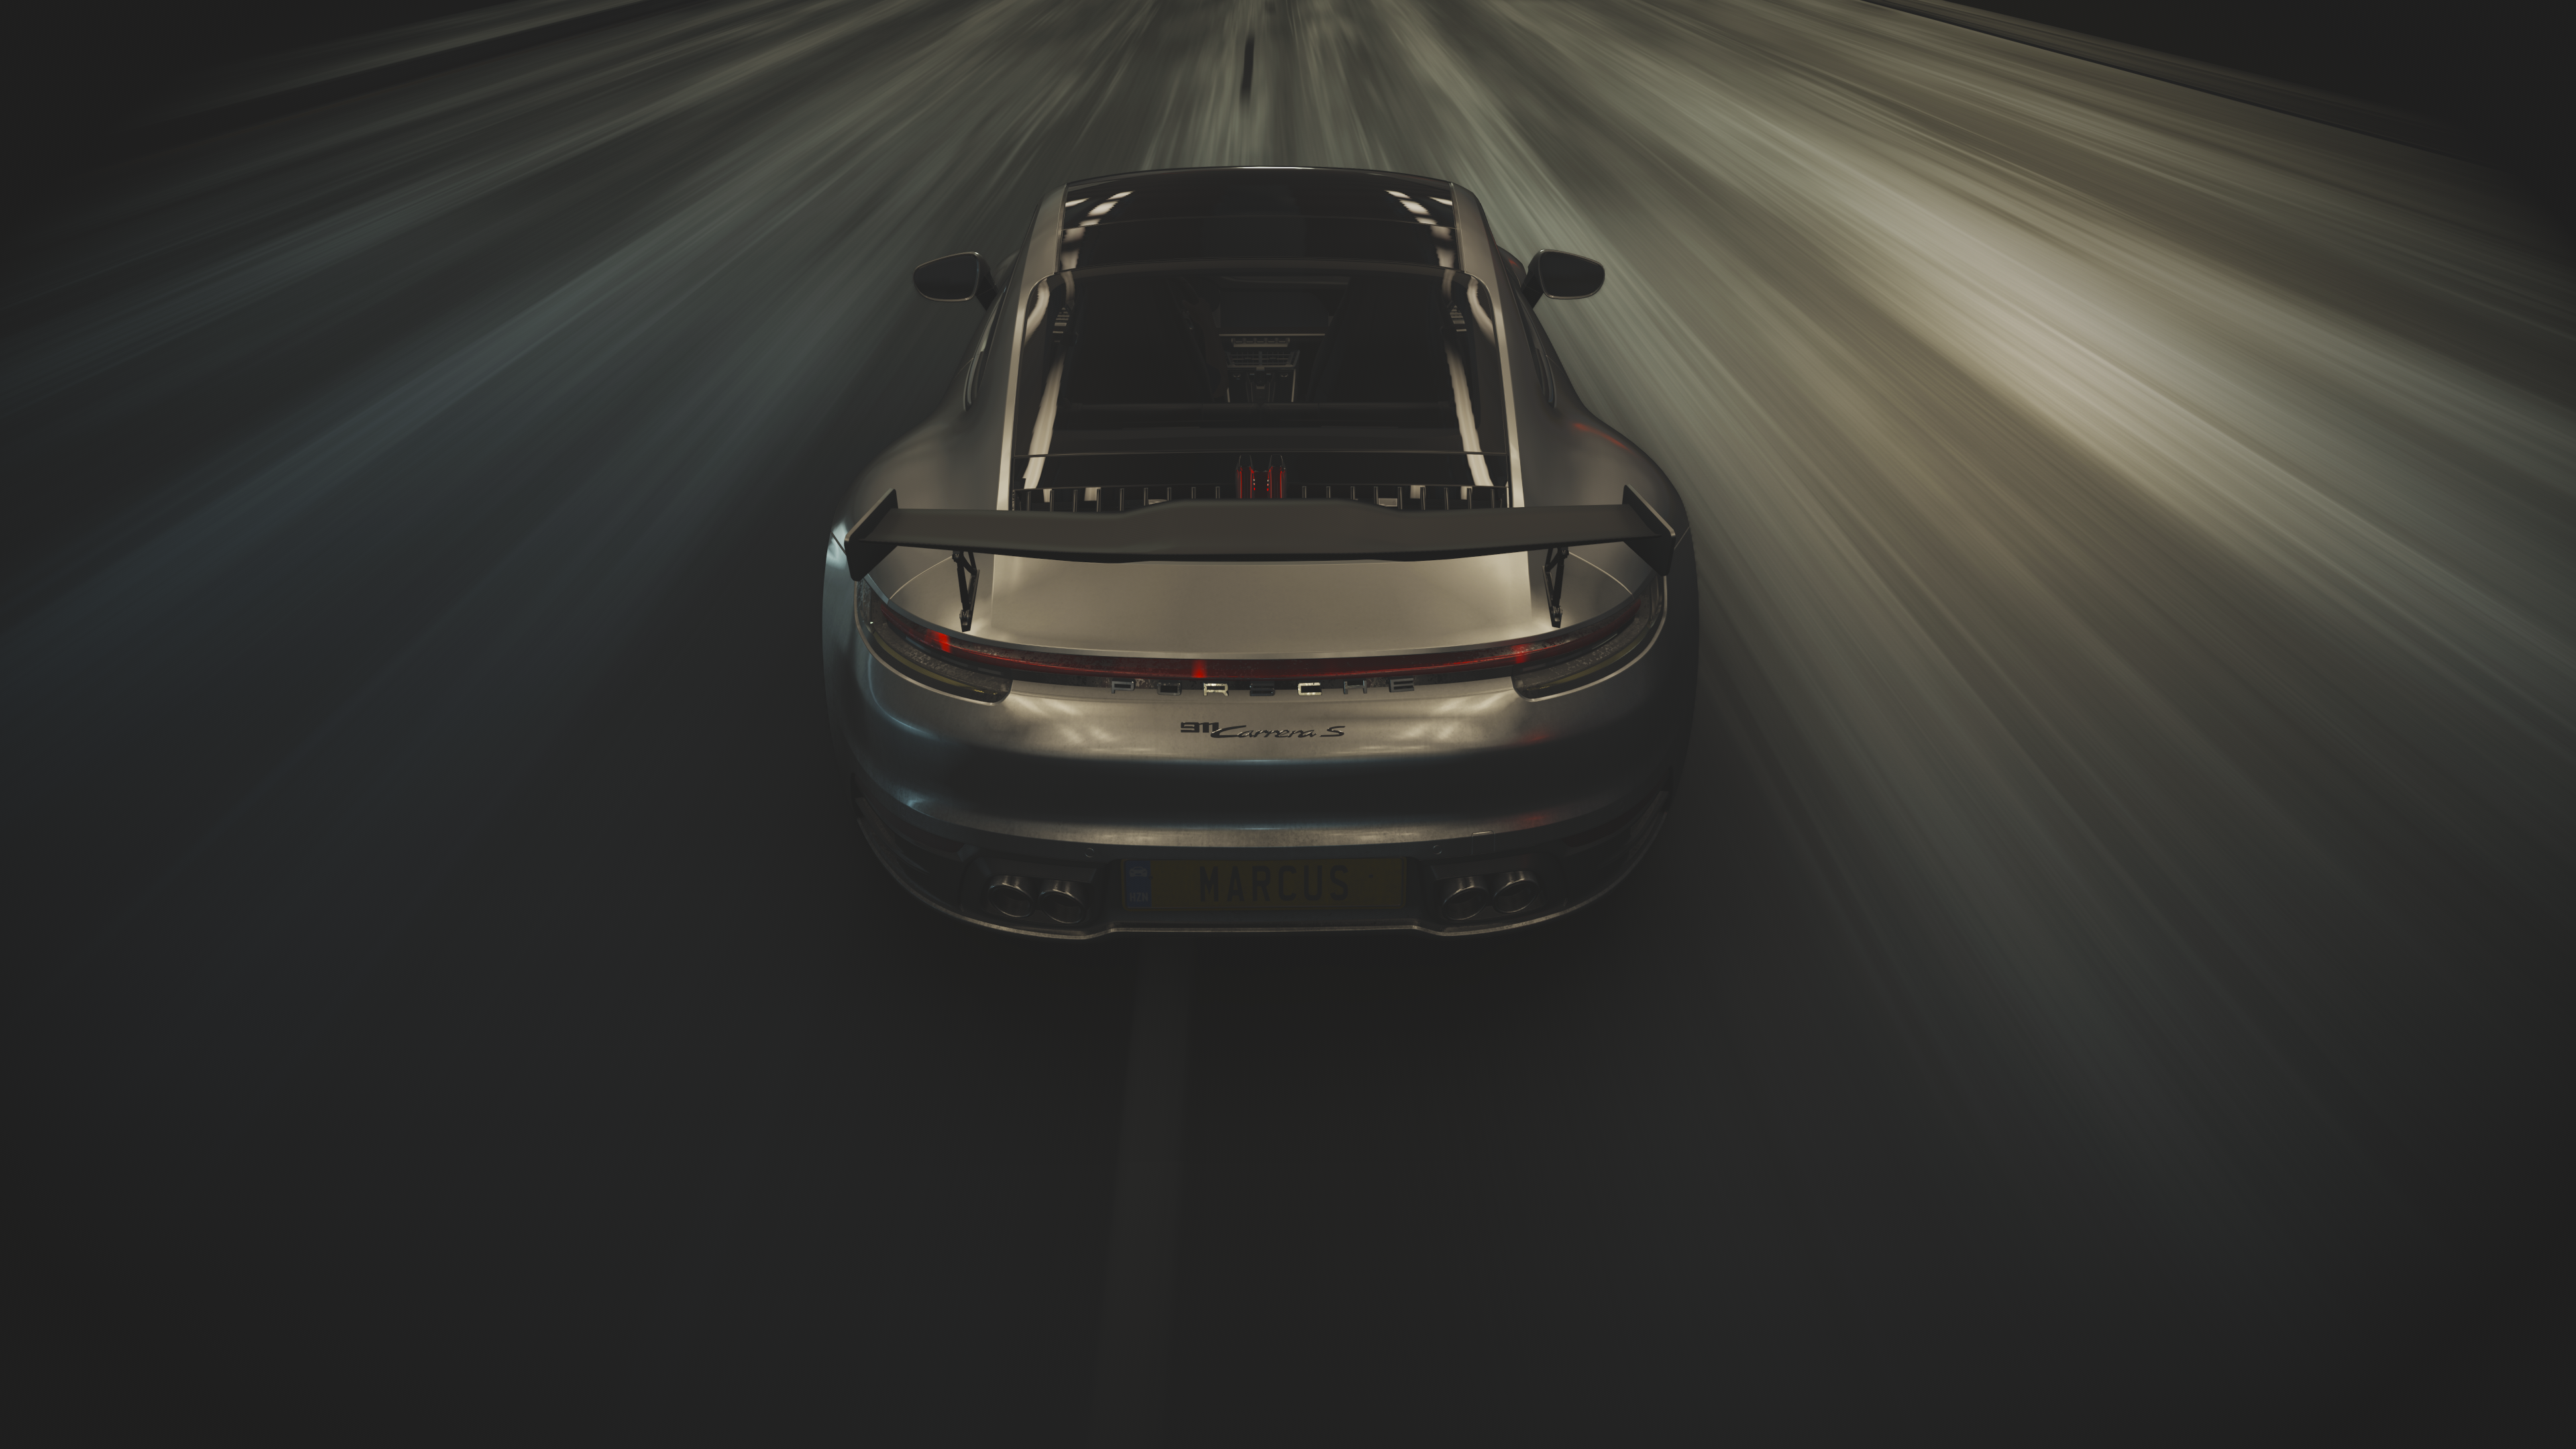 General 3840x2160 Forza Horizon 4 Forza racing car Porsche 911 Porsche 992 rear view motion blur screen shot video games